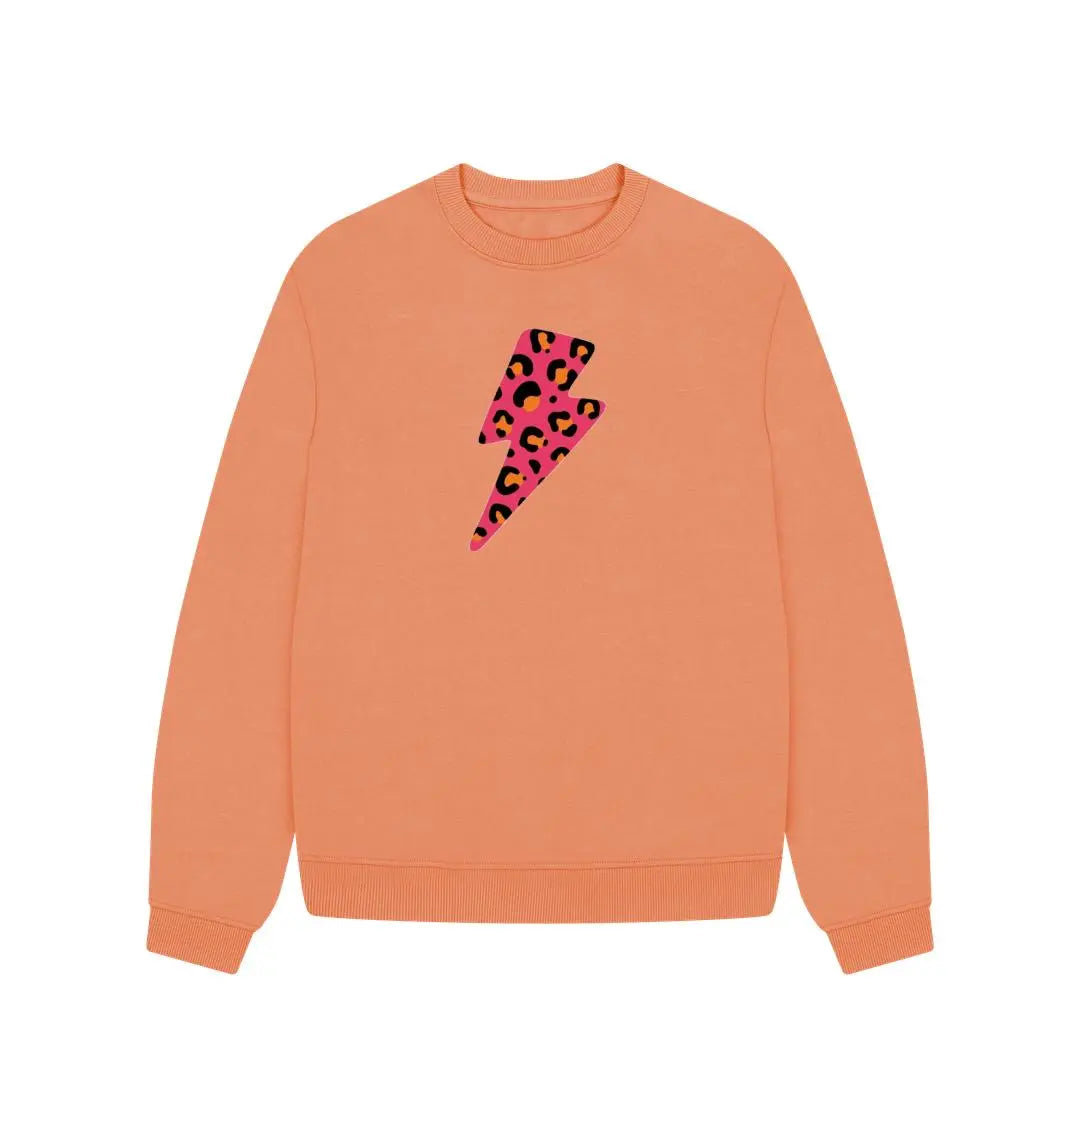 Pink and orange leopard lightning bolt oversized sweater - Trend Tonic